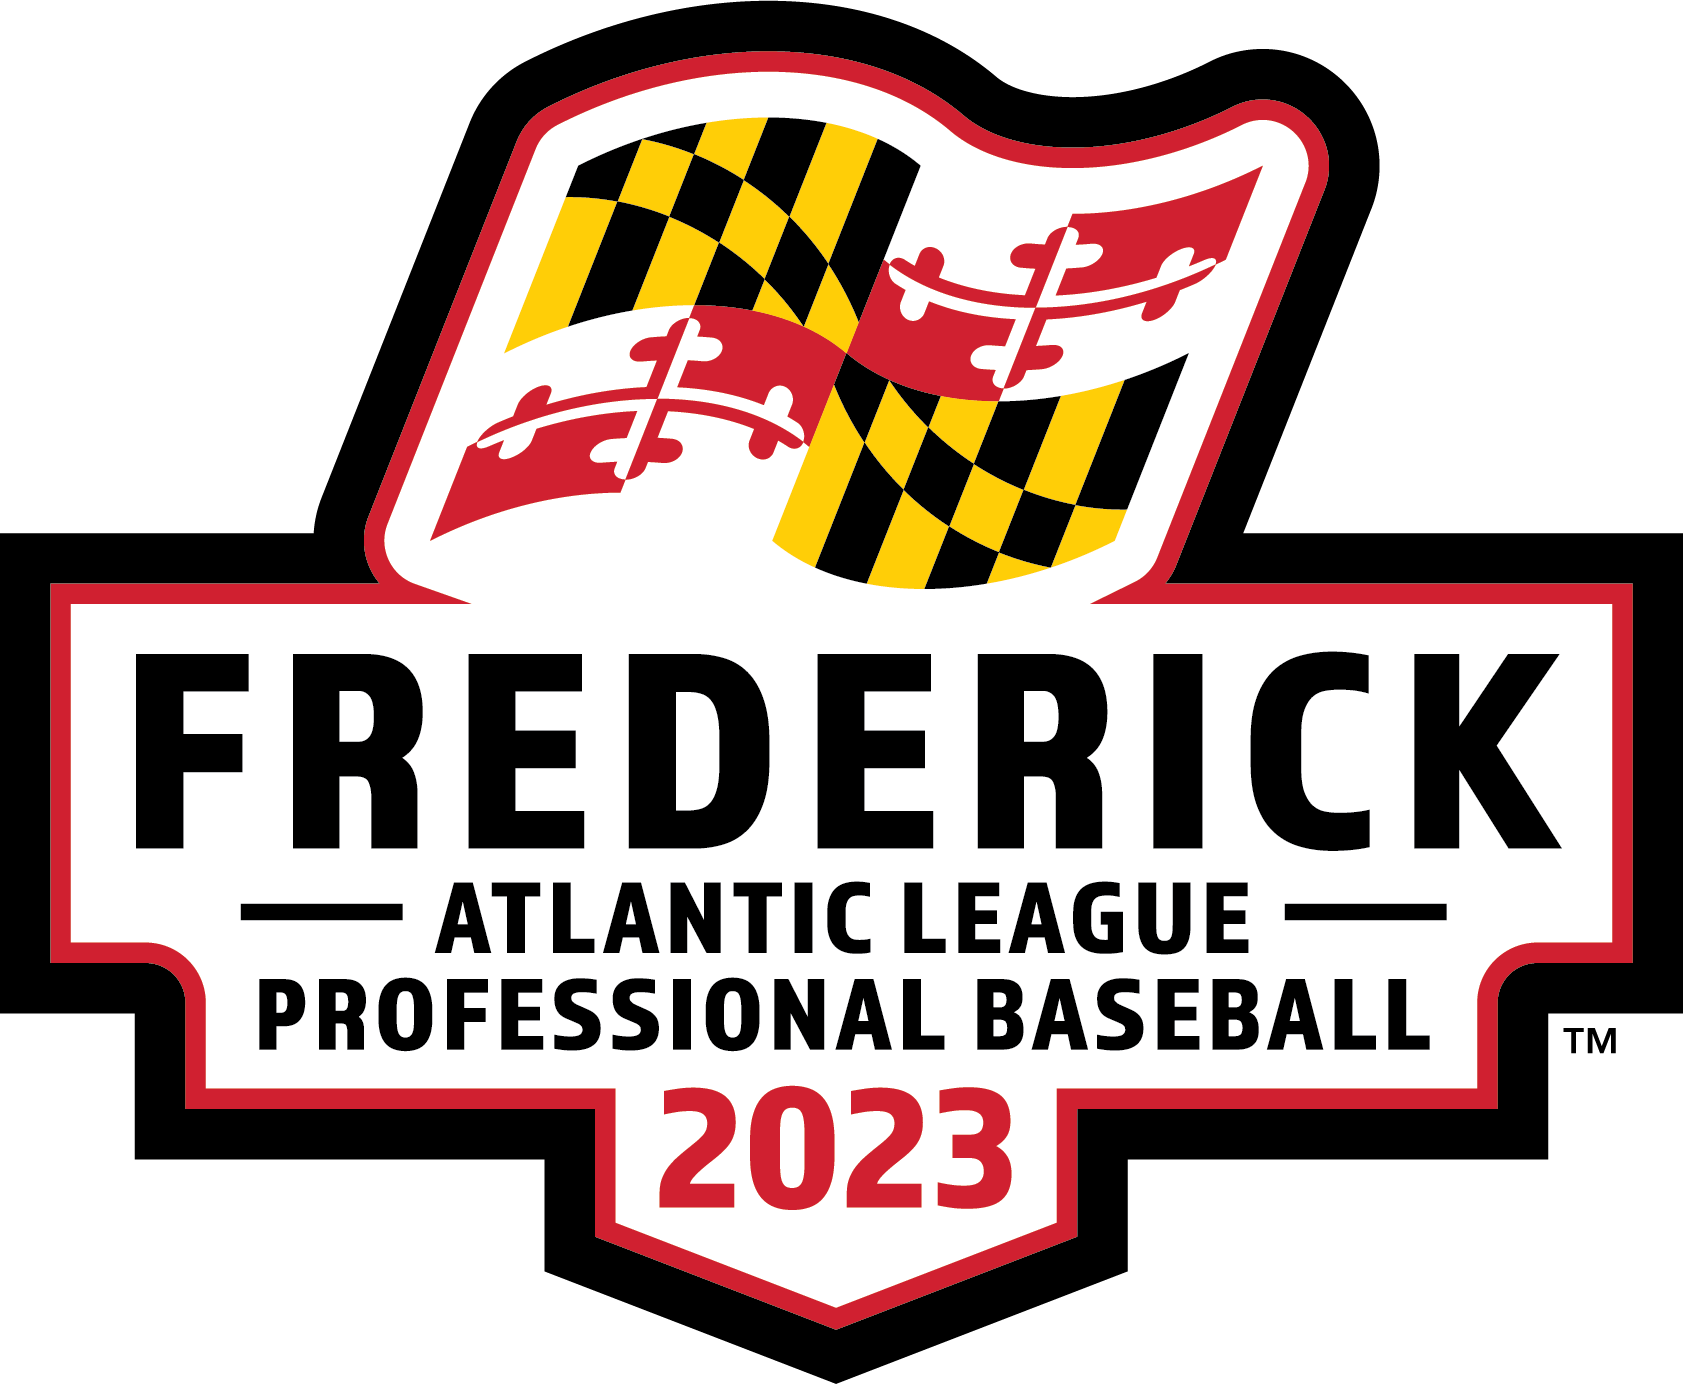 Frederick Atlantic League Professional Baseball